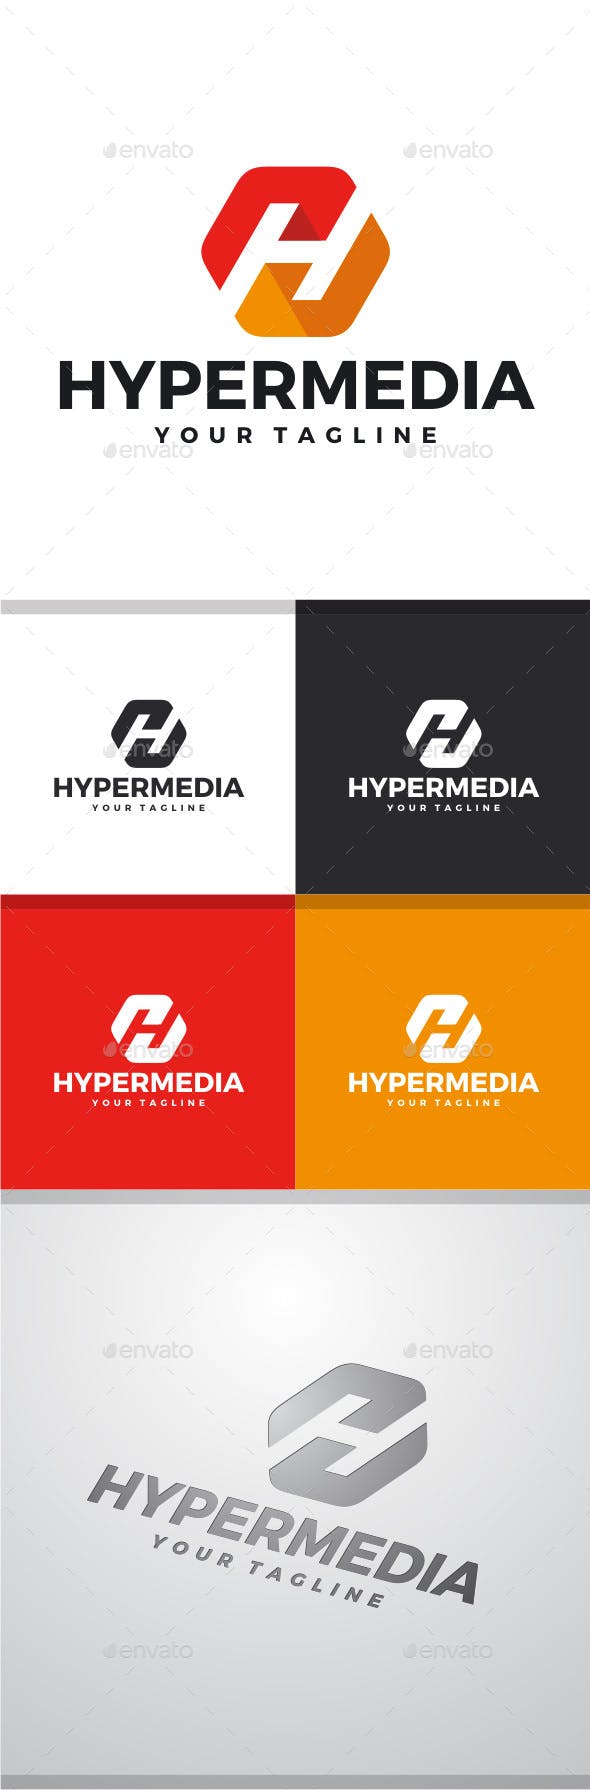 Red Letter H Logo - Hyper Media - Letter H Logo by yopie | GraphicRiver